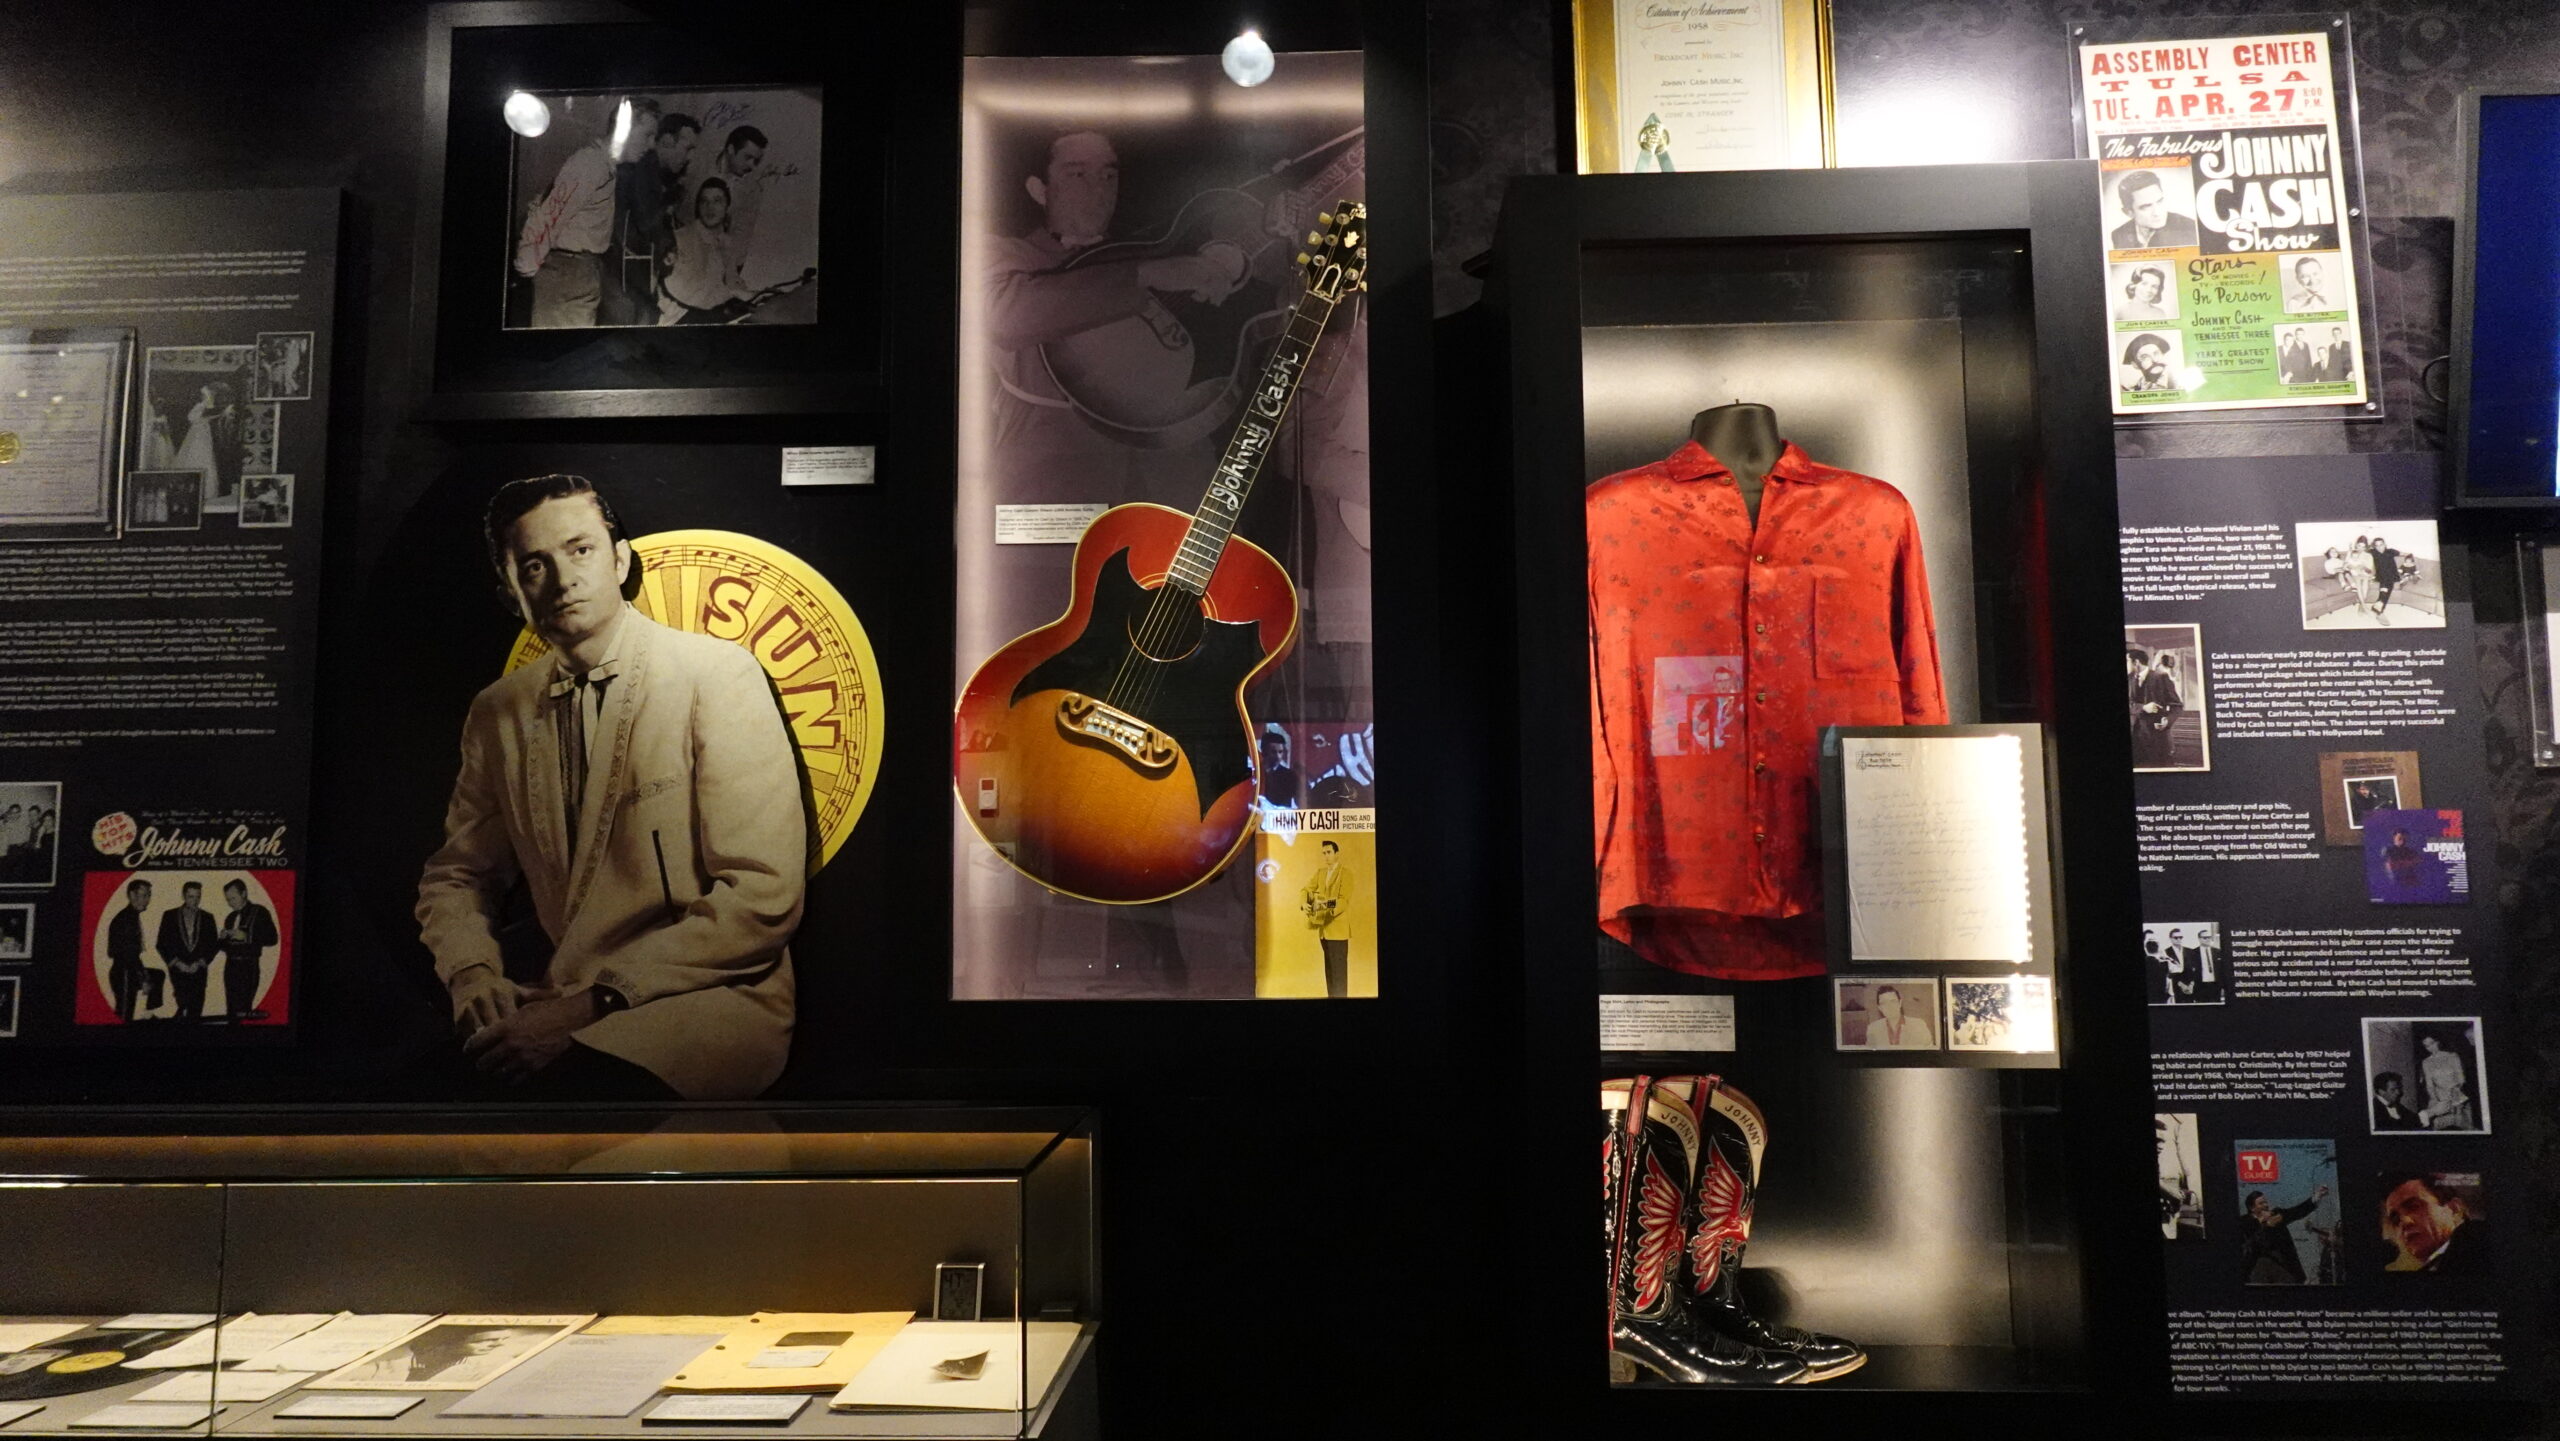 Johnny Cash museum in Nashville. Shows a wall of memorabilia